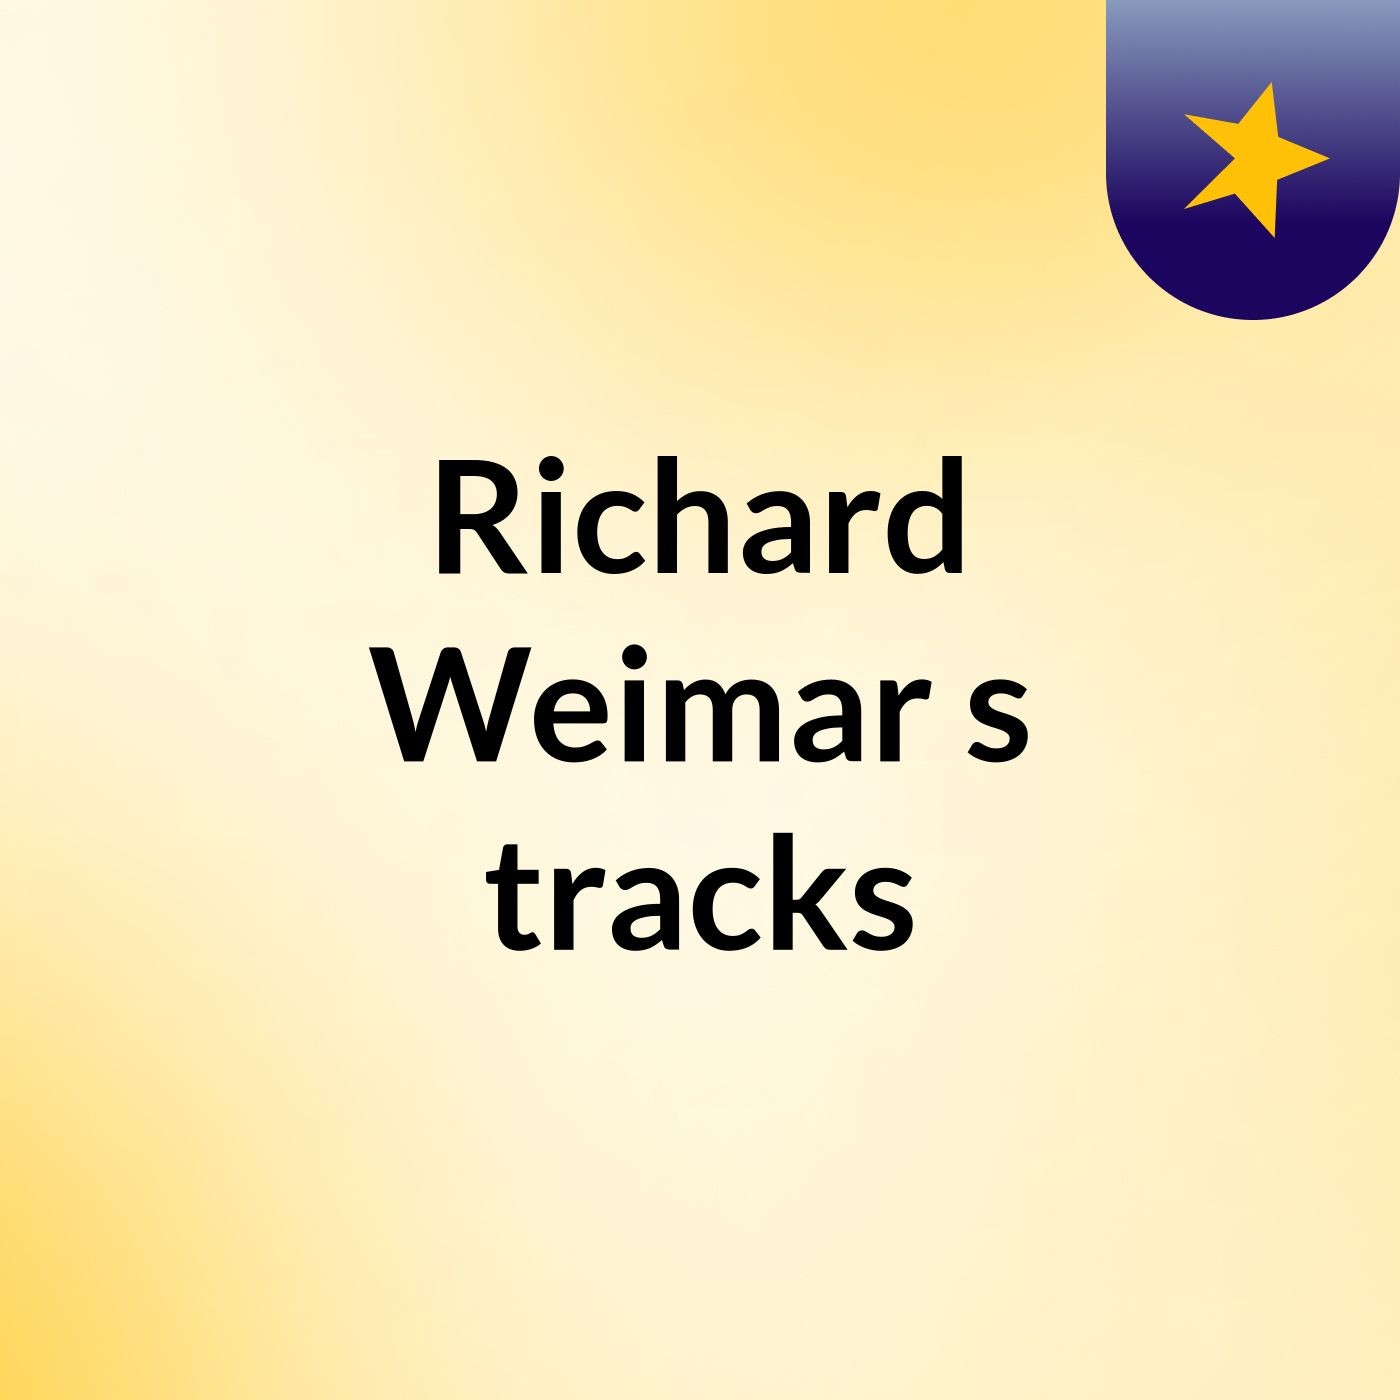 Richard Weimar's tracks